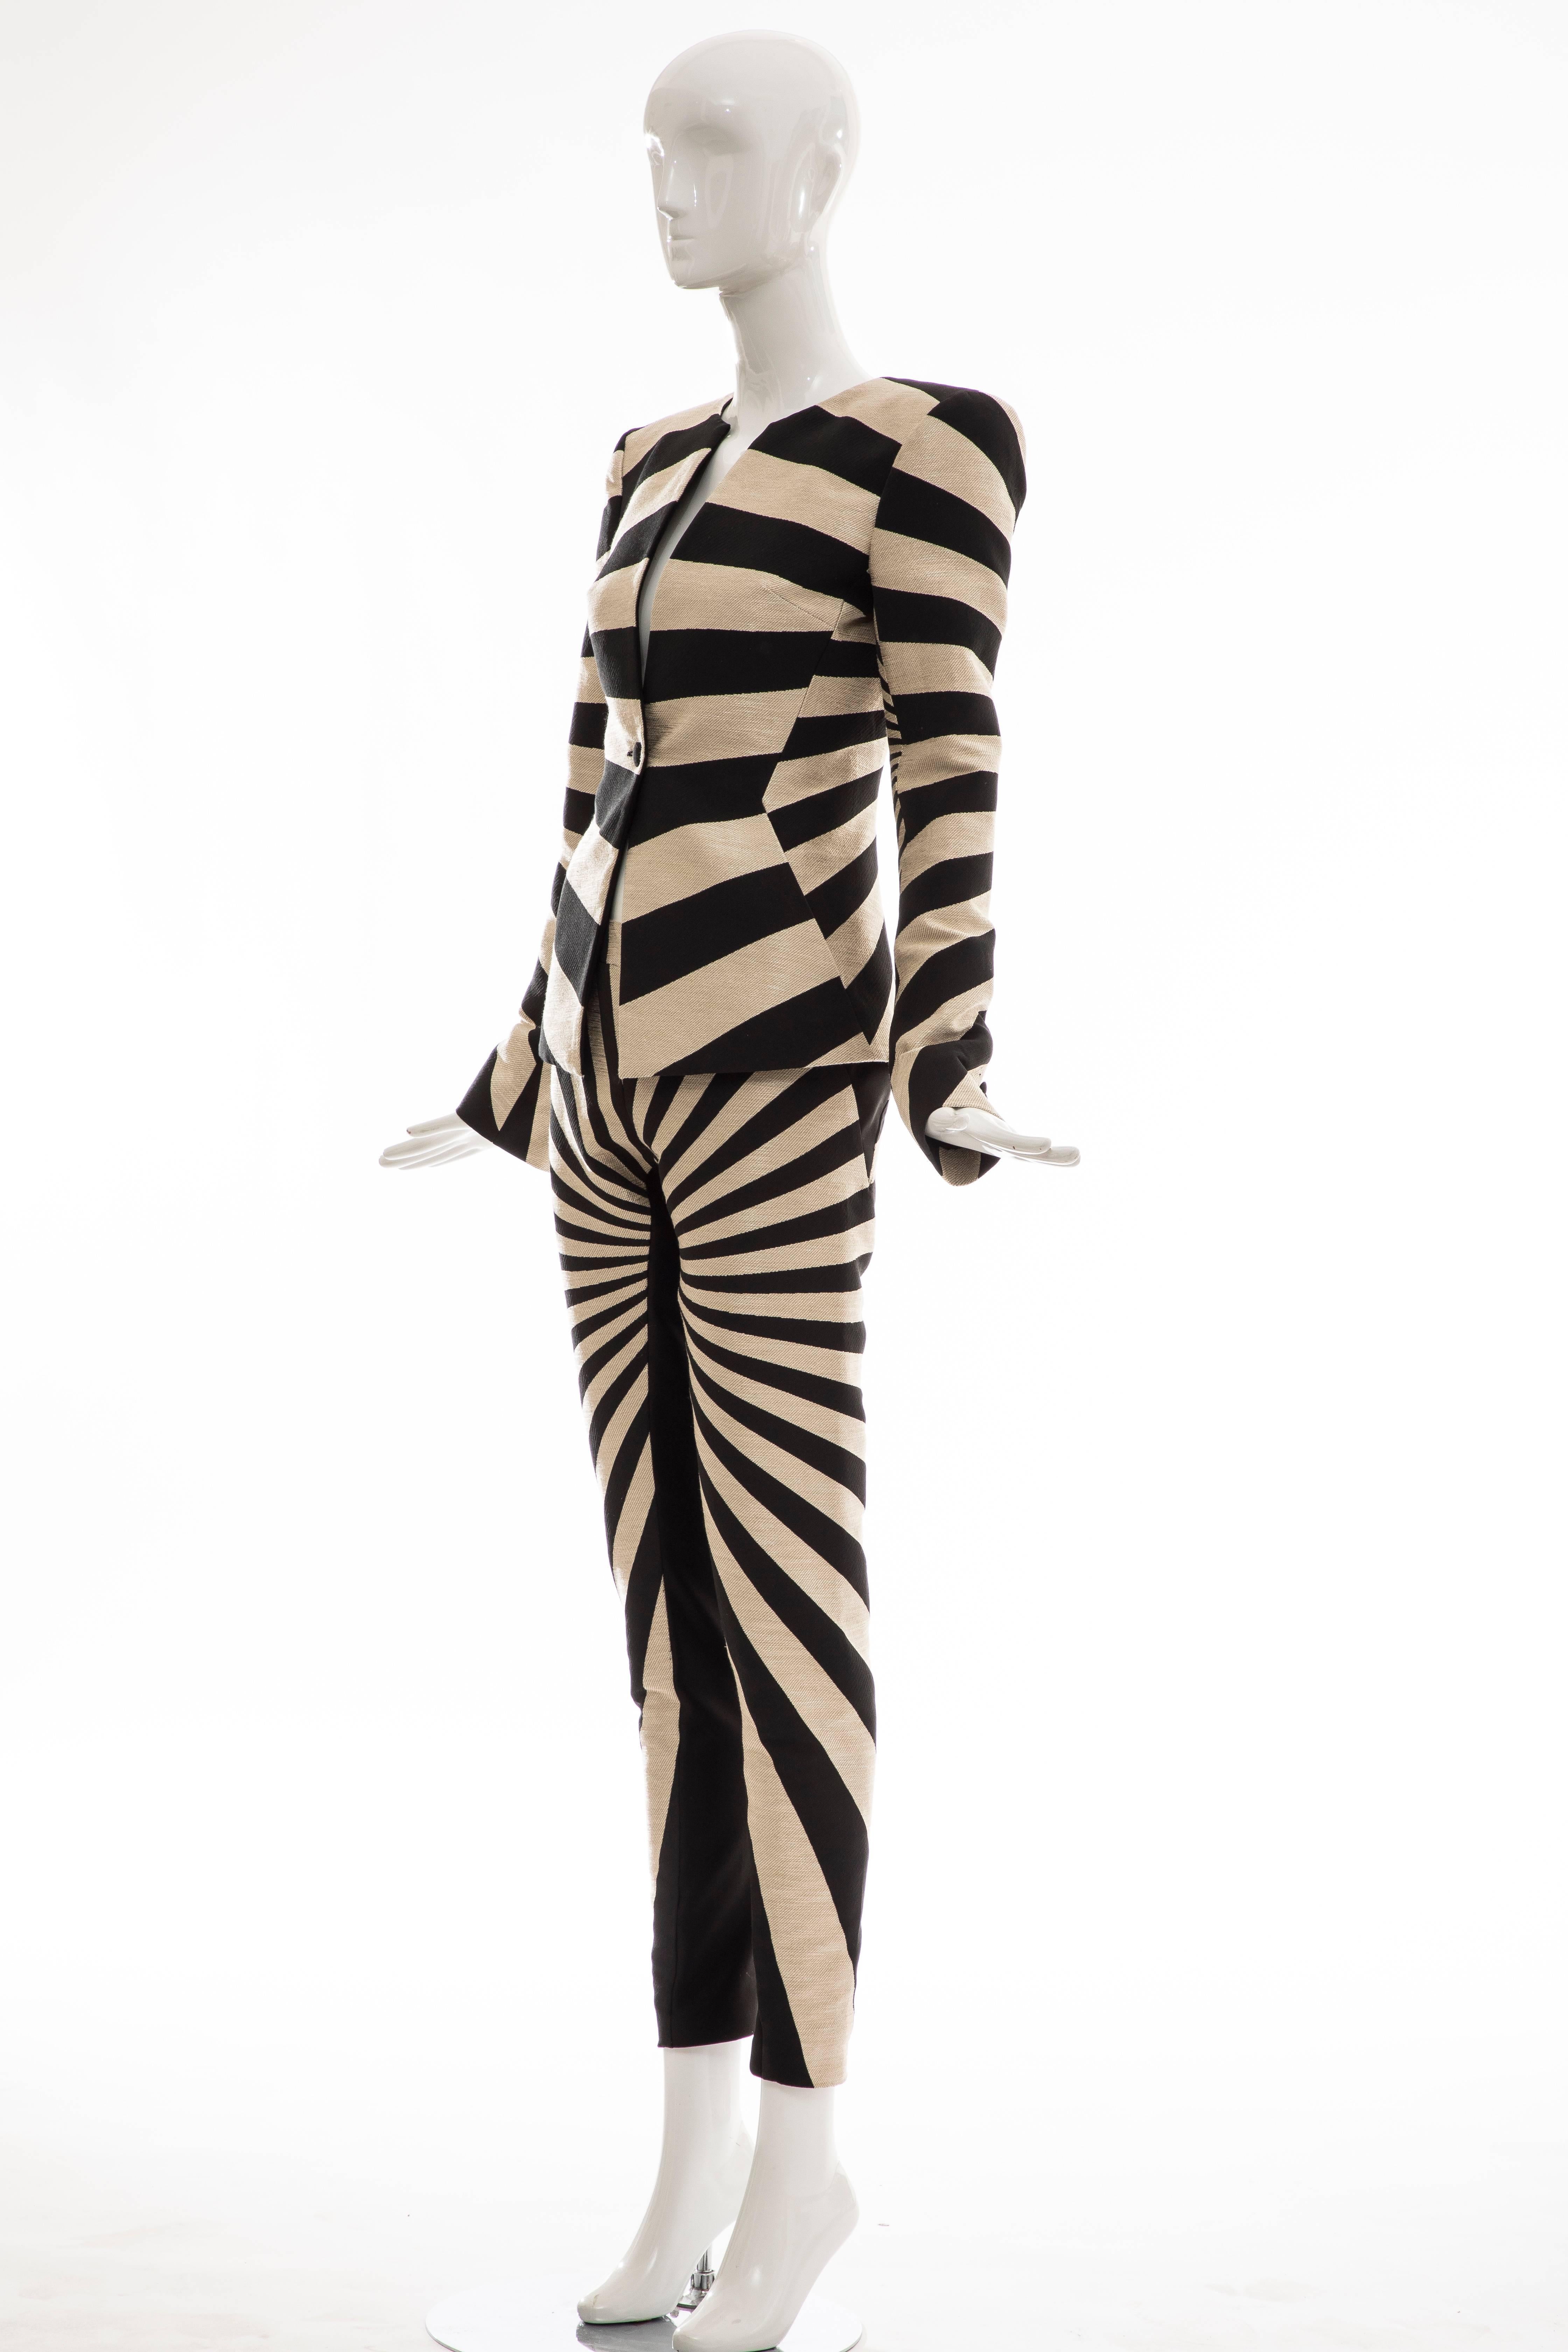 Gareth Pugh Woven Striped Pattern Pantsuit, Spring 2017 For Sale 6